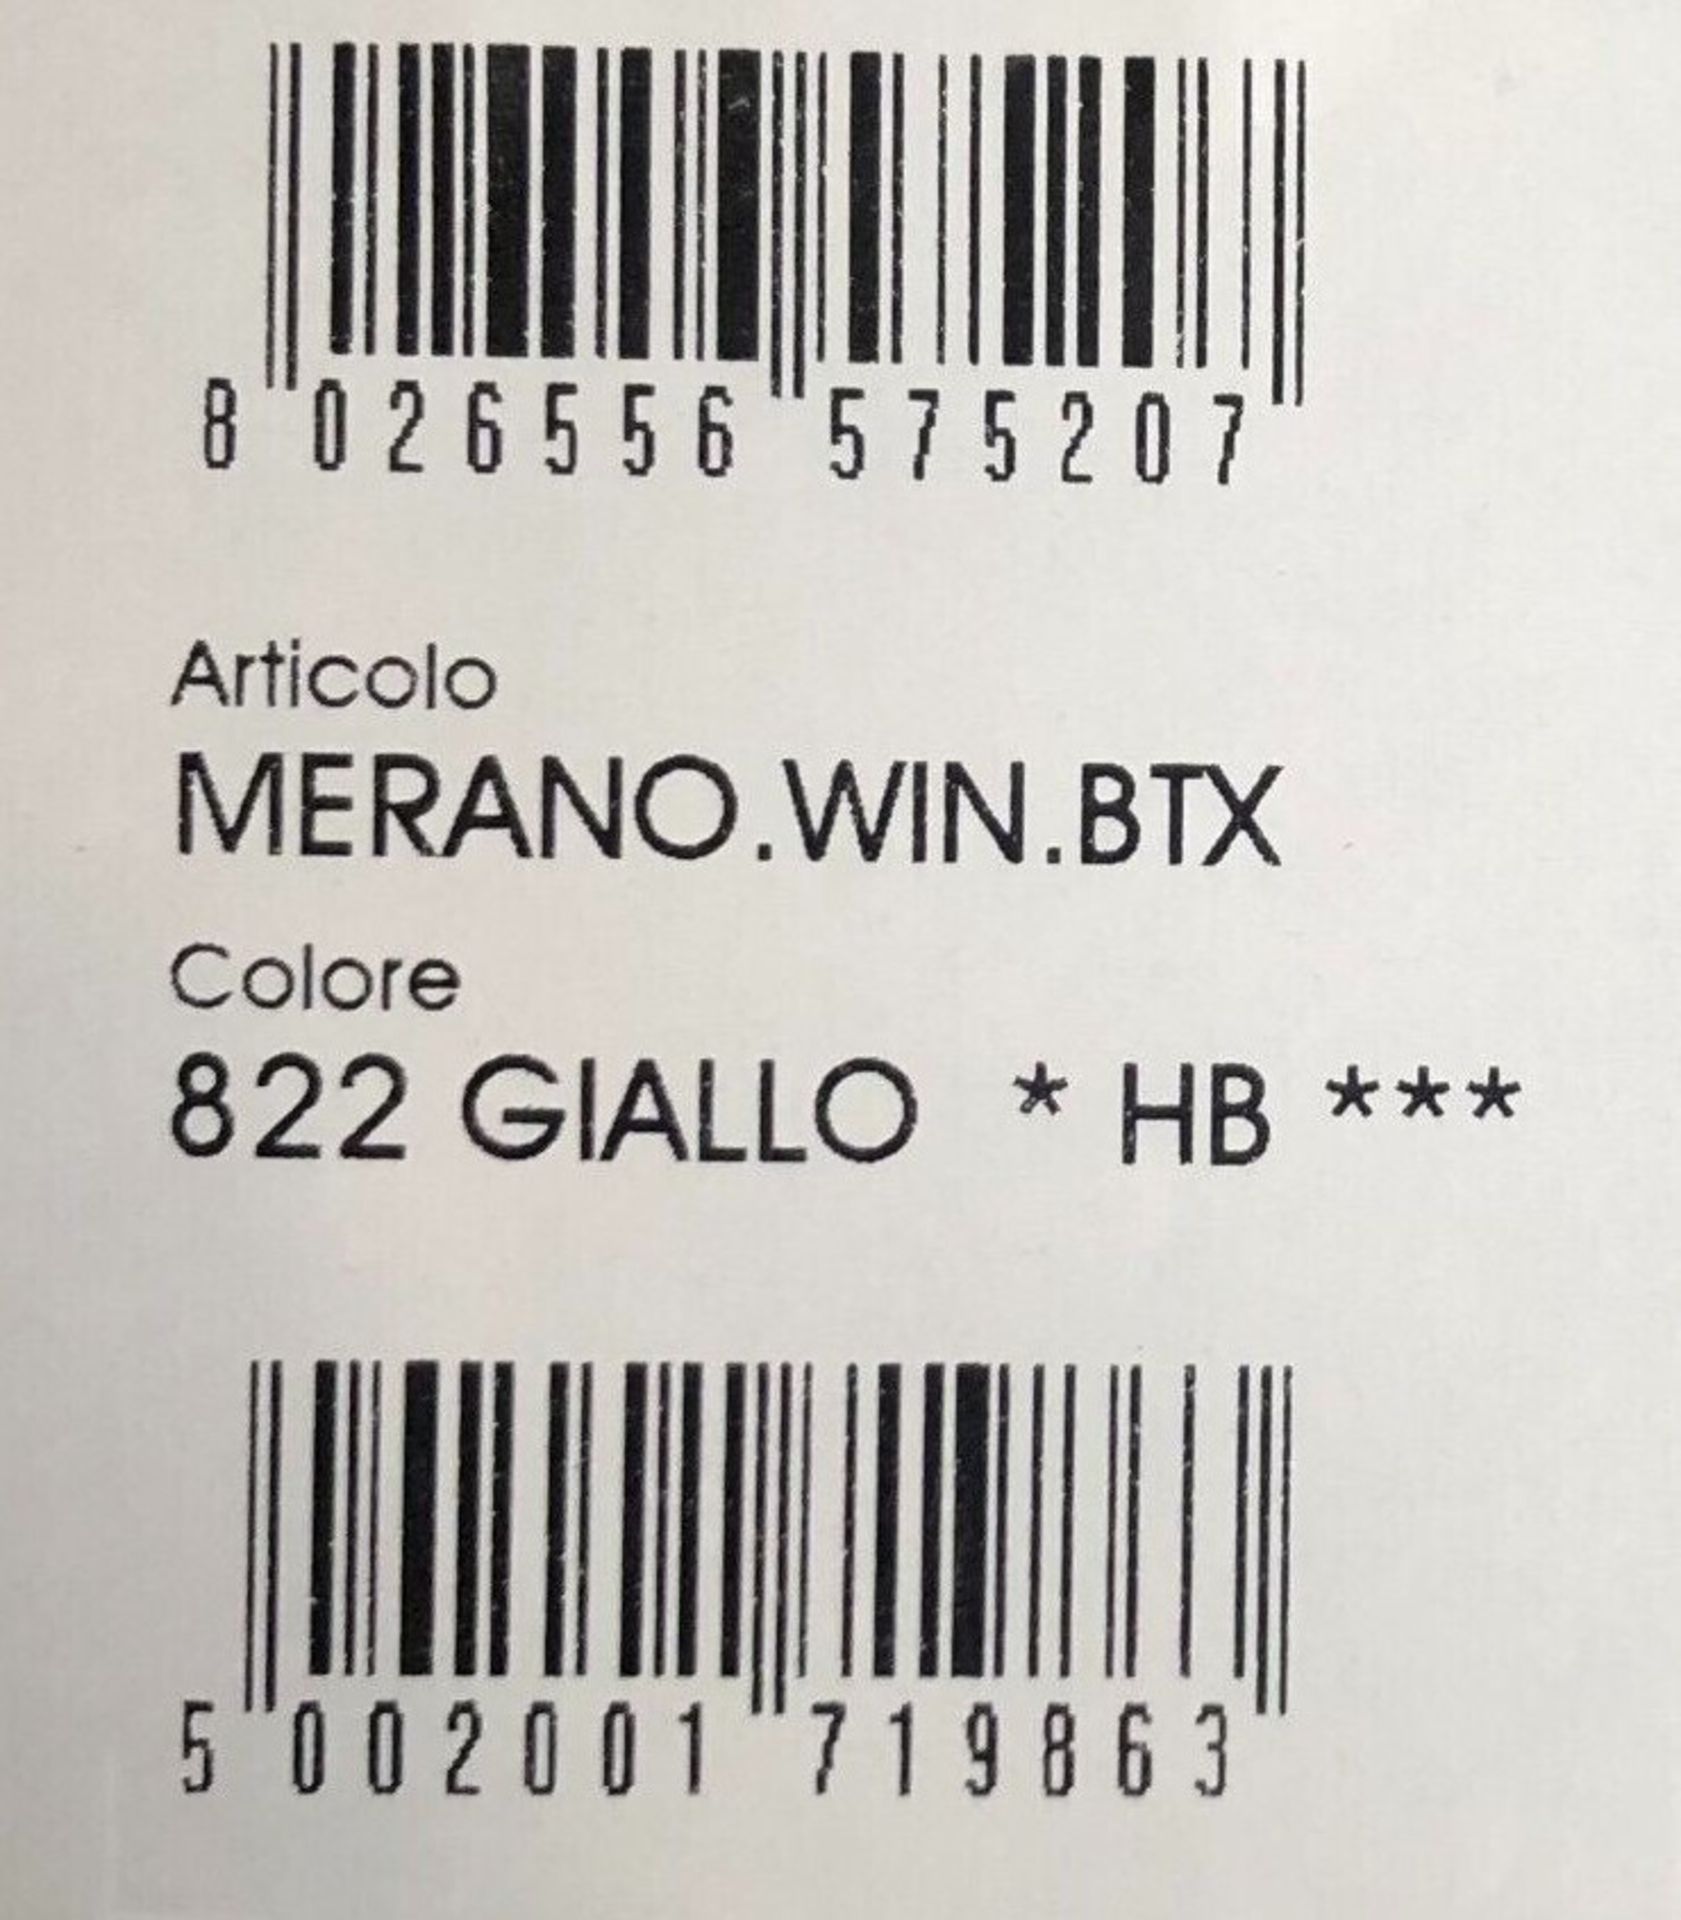 1 x Pair of Designer Olang Women's Winter Boots - Merano.Win.BTX 822 Giallo - Euro Size 40 - New - Image 6 of 7